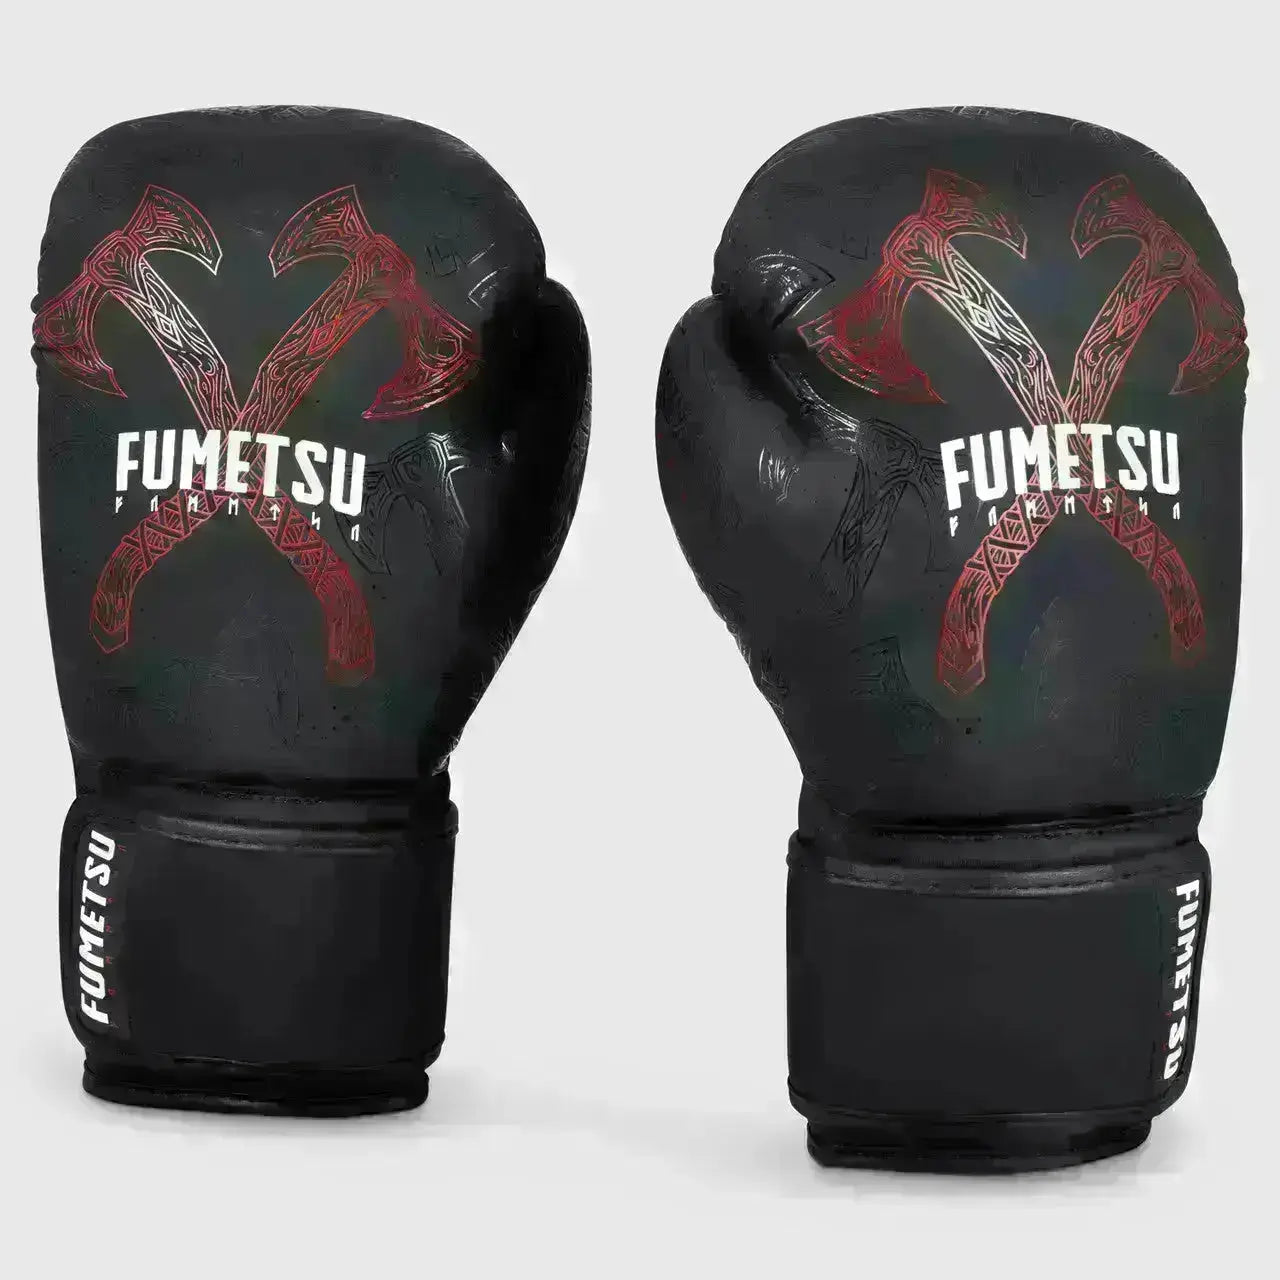 Fumetsu Berserker Boxing Gloves Black-Red-16oz Fight Co